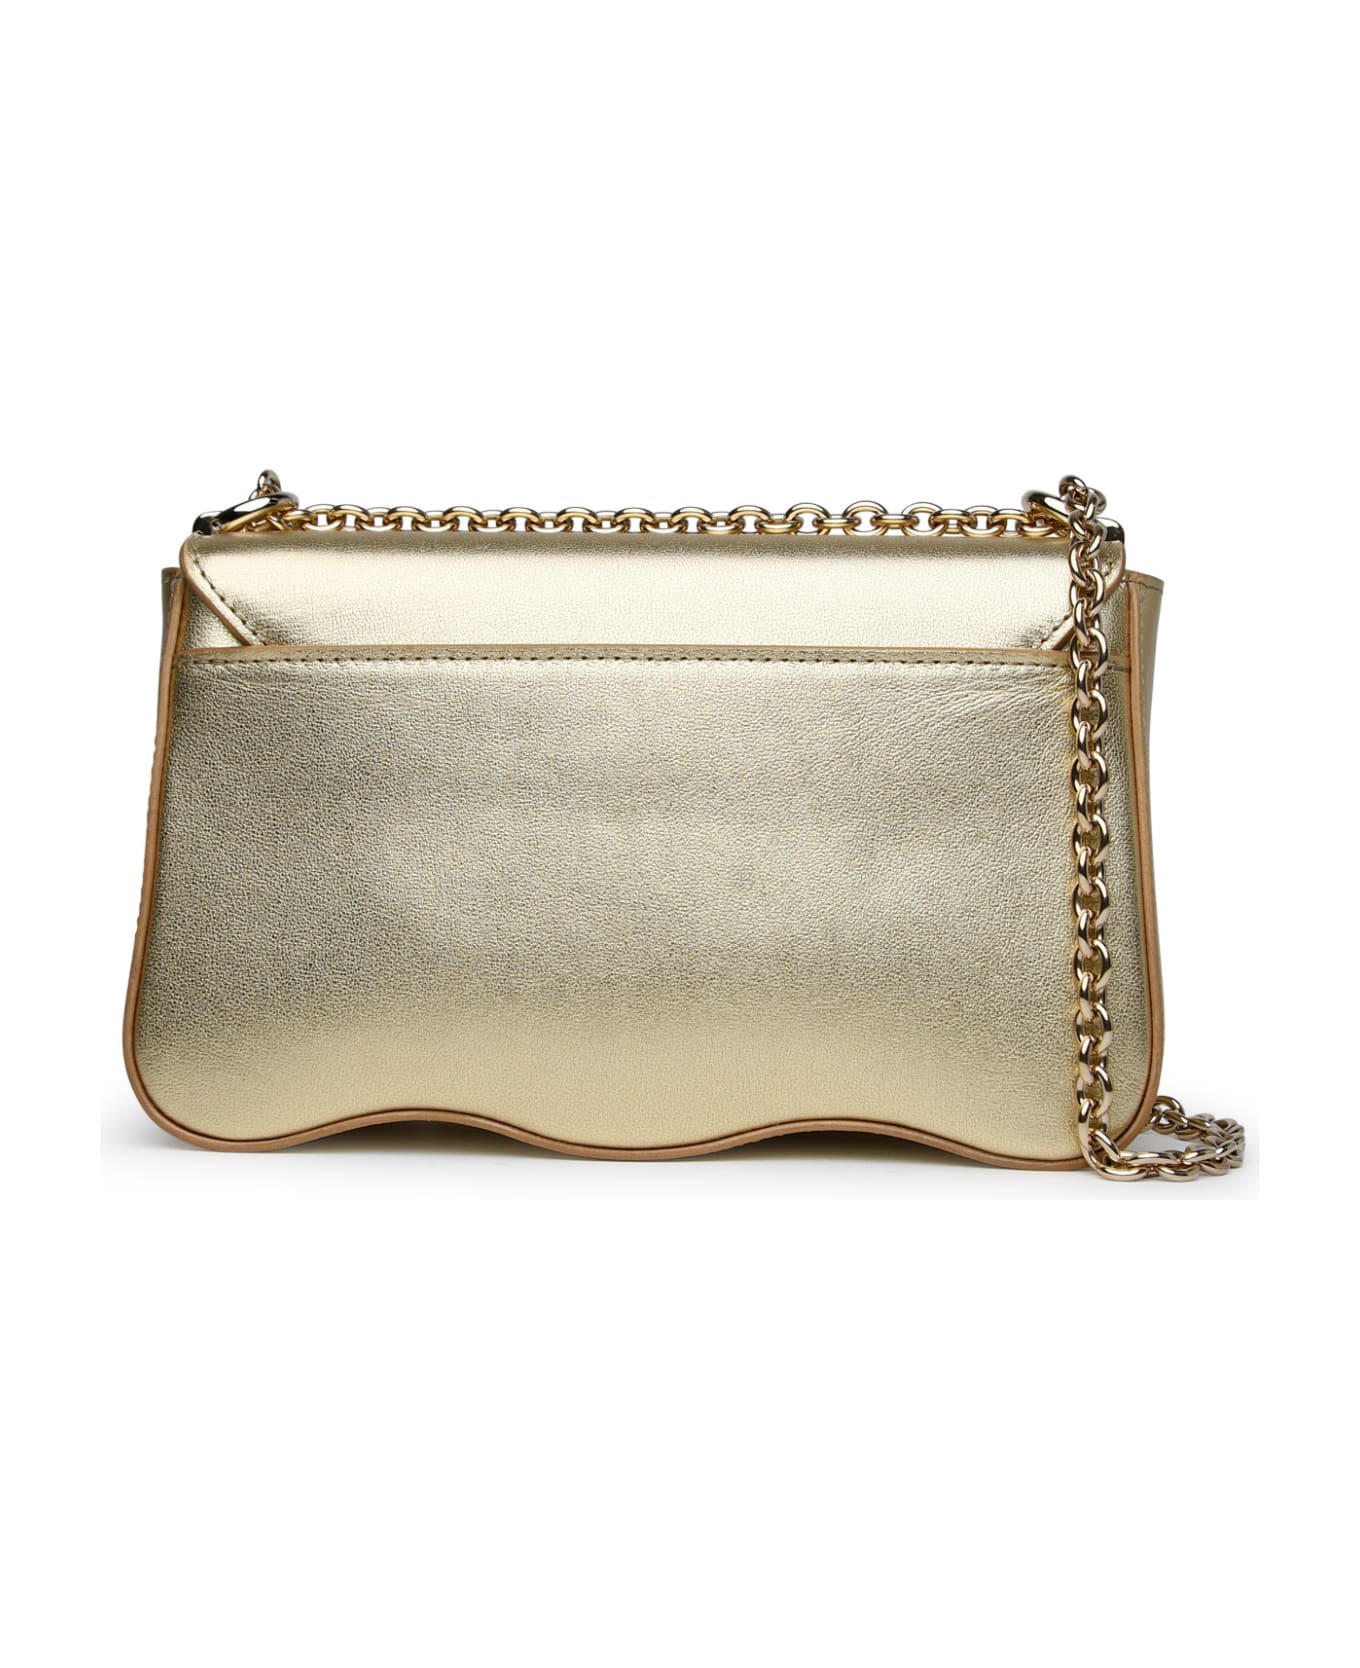 Furla 'furla 1927' Gold Calf Leather Bag - Color Gold